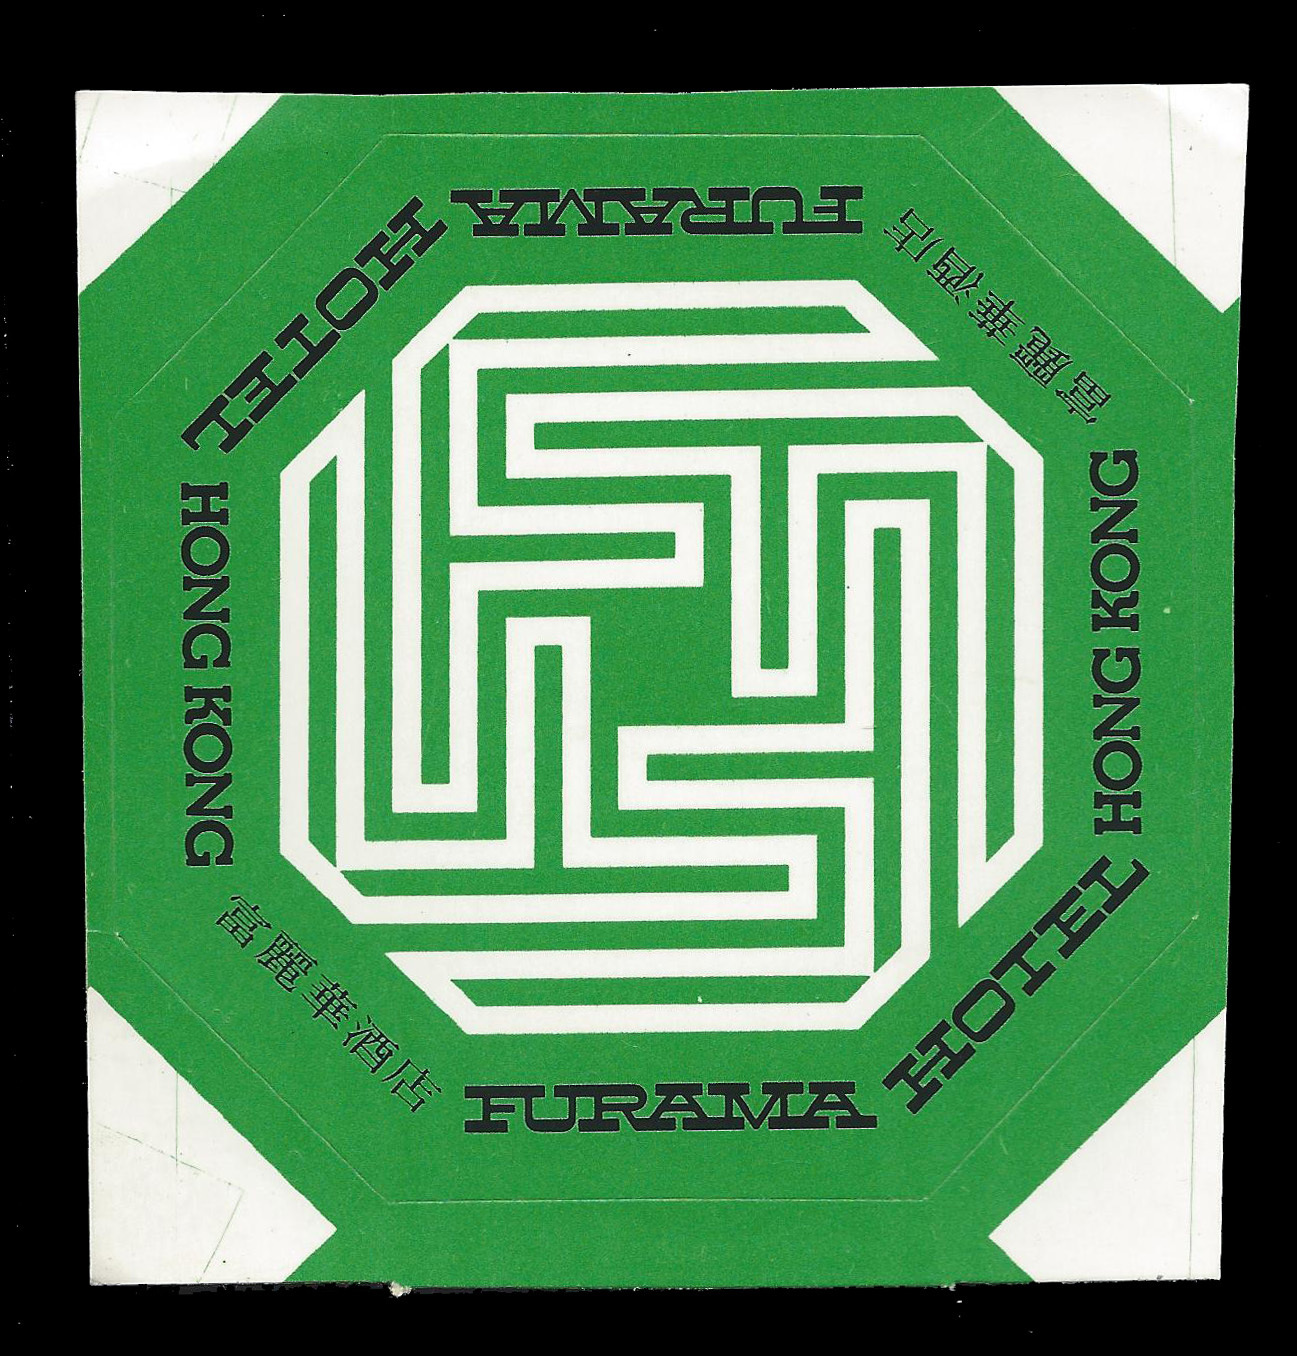 Furama InterContinental Hotel Branding Logo 1974